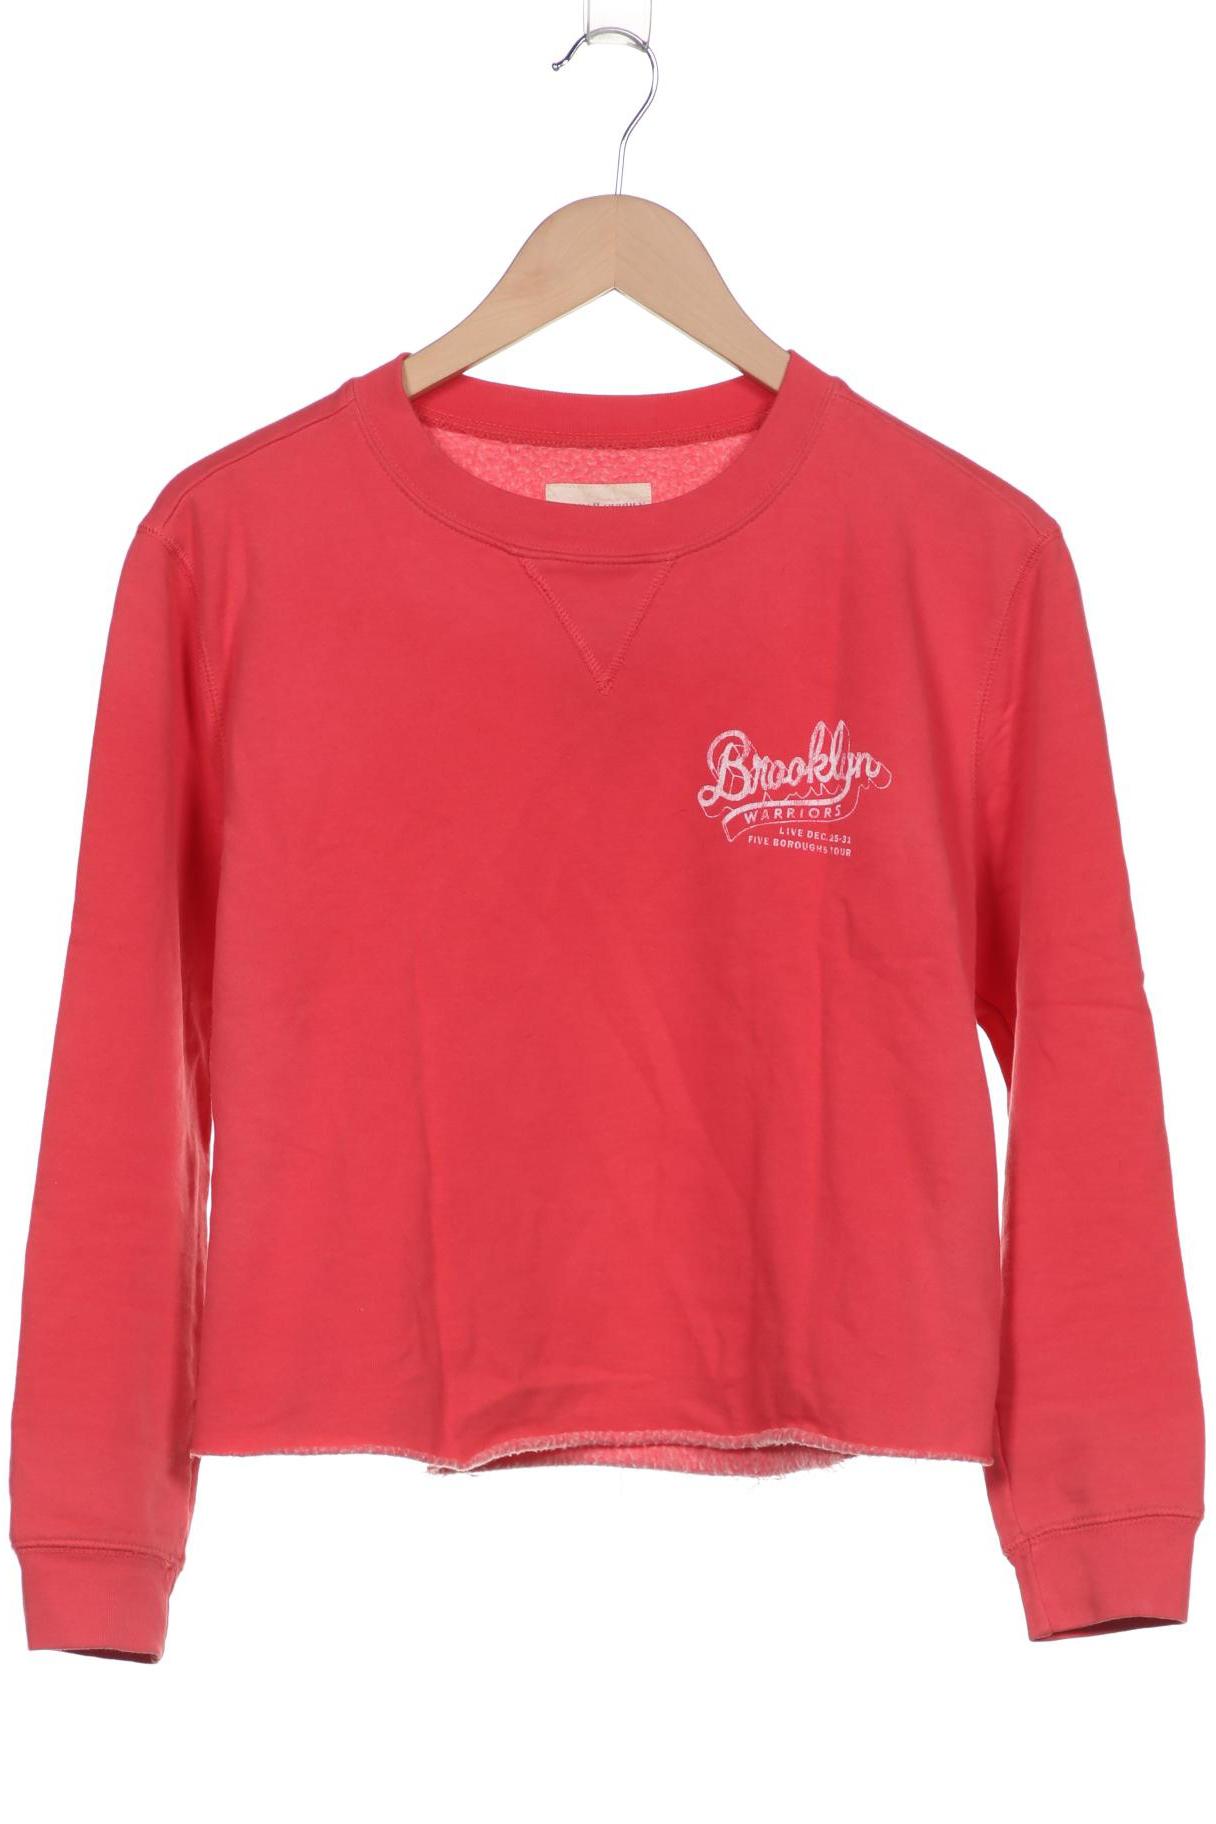 Denim & Supply by Ralph Lauren Damen Sweatshirt, pink von Denim & Supply by Ralph Lauren